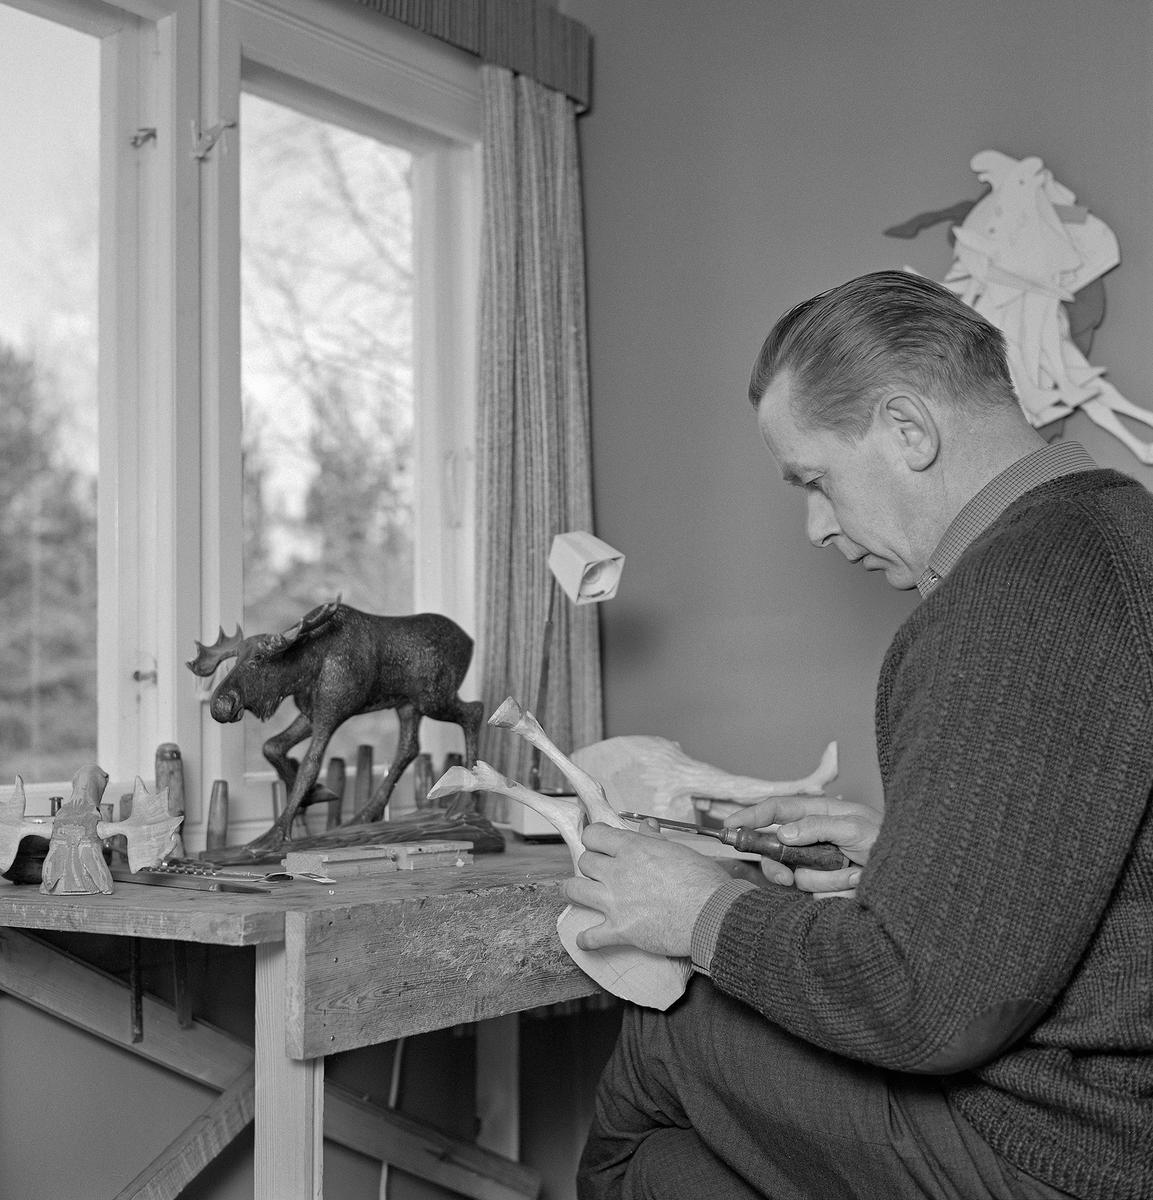 Bilde viser Vidar Sandbeck mens han skjærer en elg (Foto/Photo)